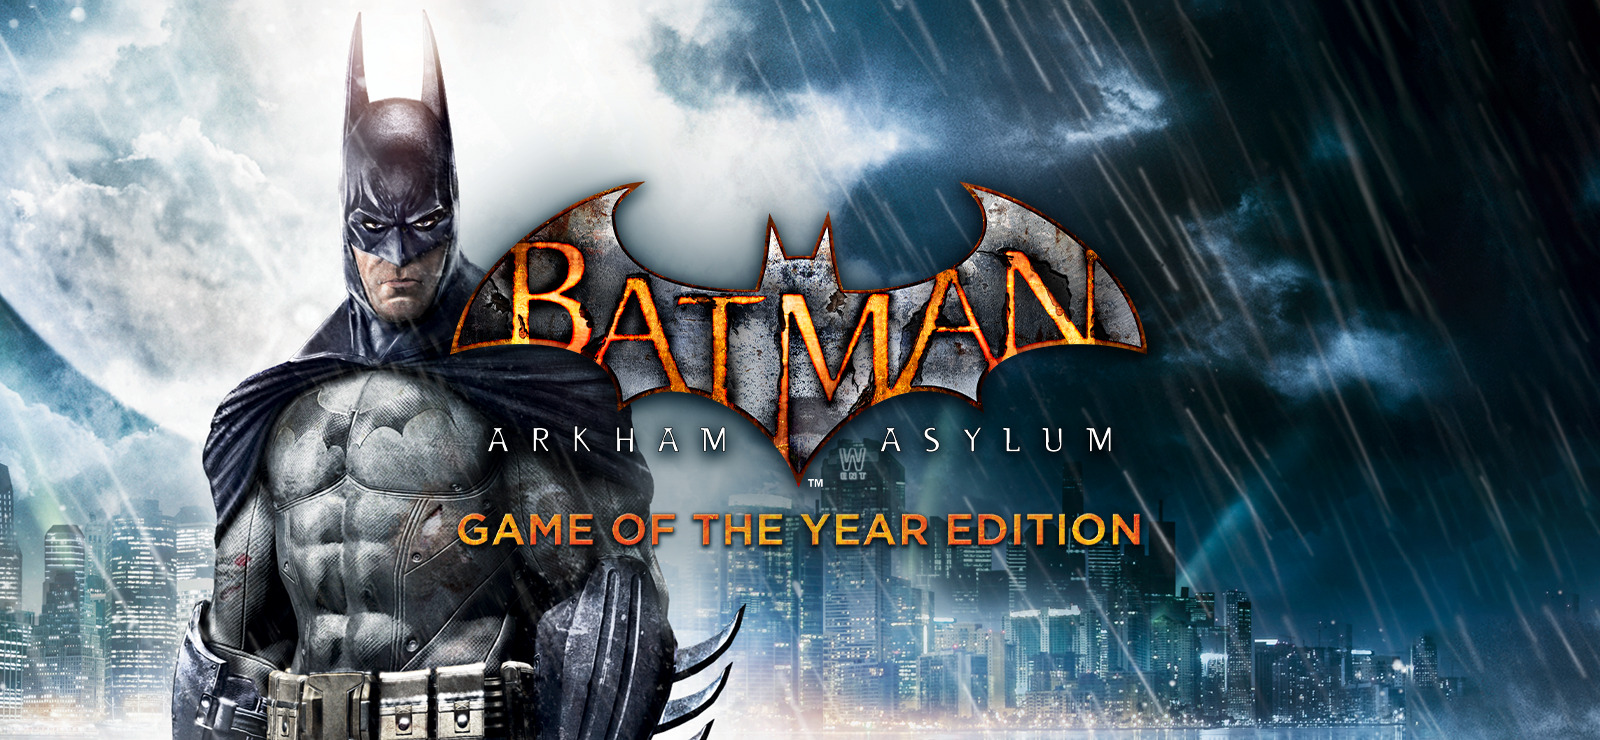 Batman: Arkham Asylum Game of the Year Edition on GOG.com